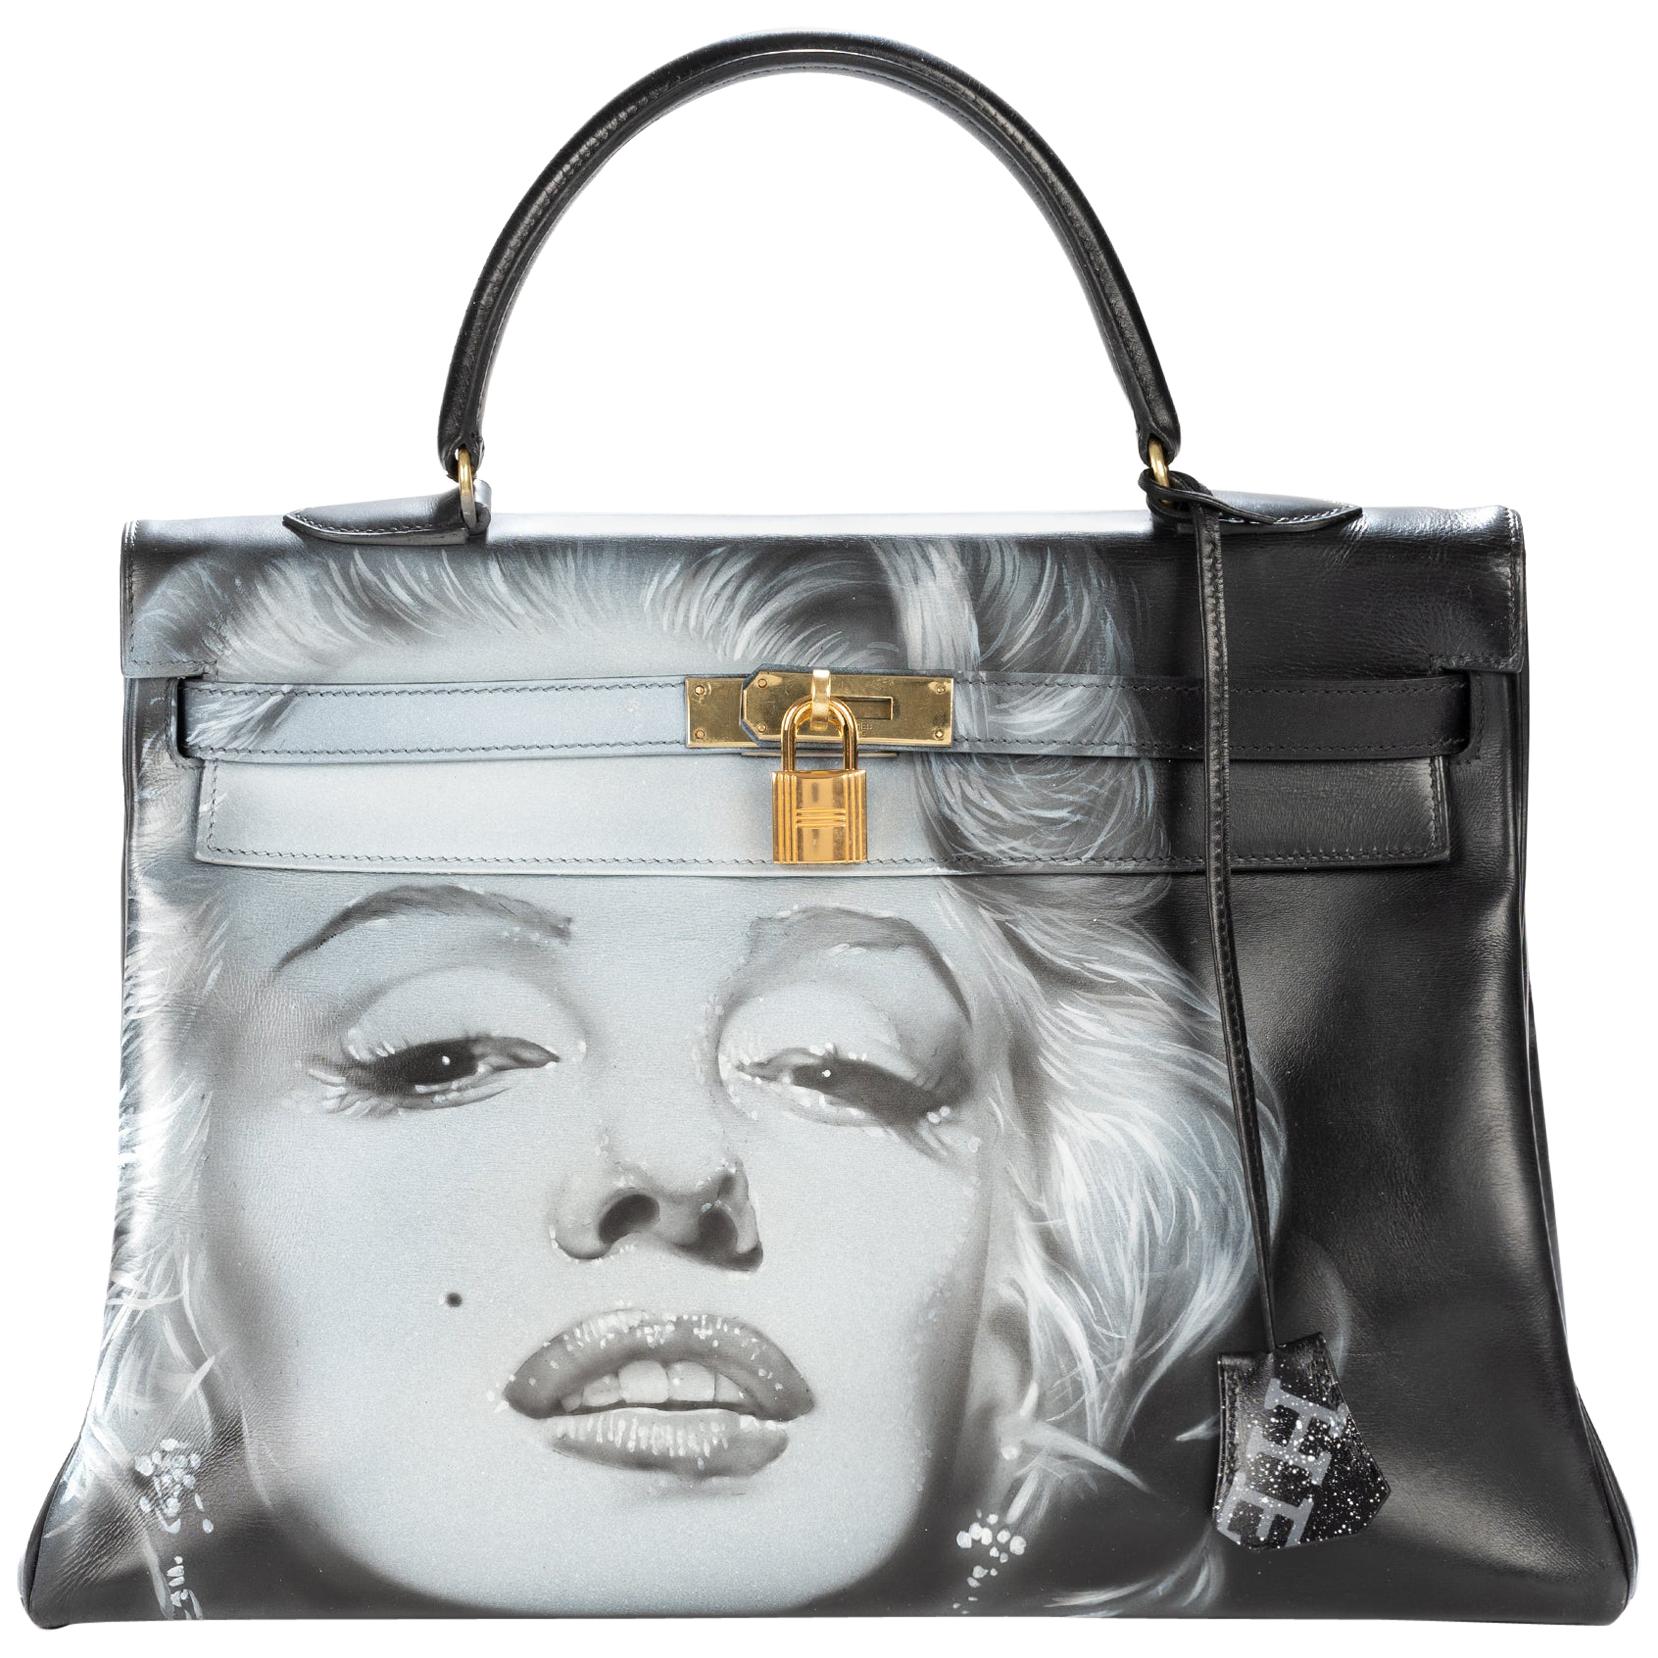 Amazing creation "Marilyn Monroe#46" on Kelly 35 cm handbag in black calfskin